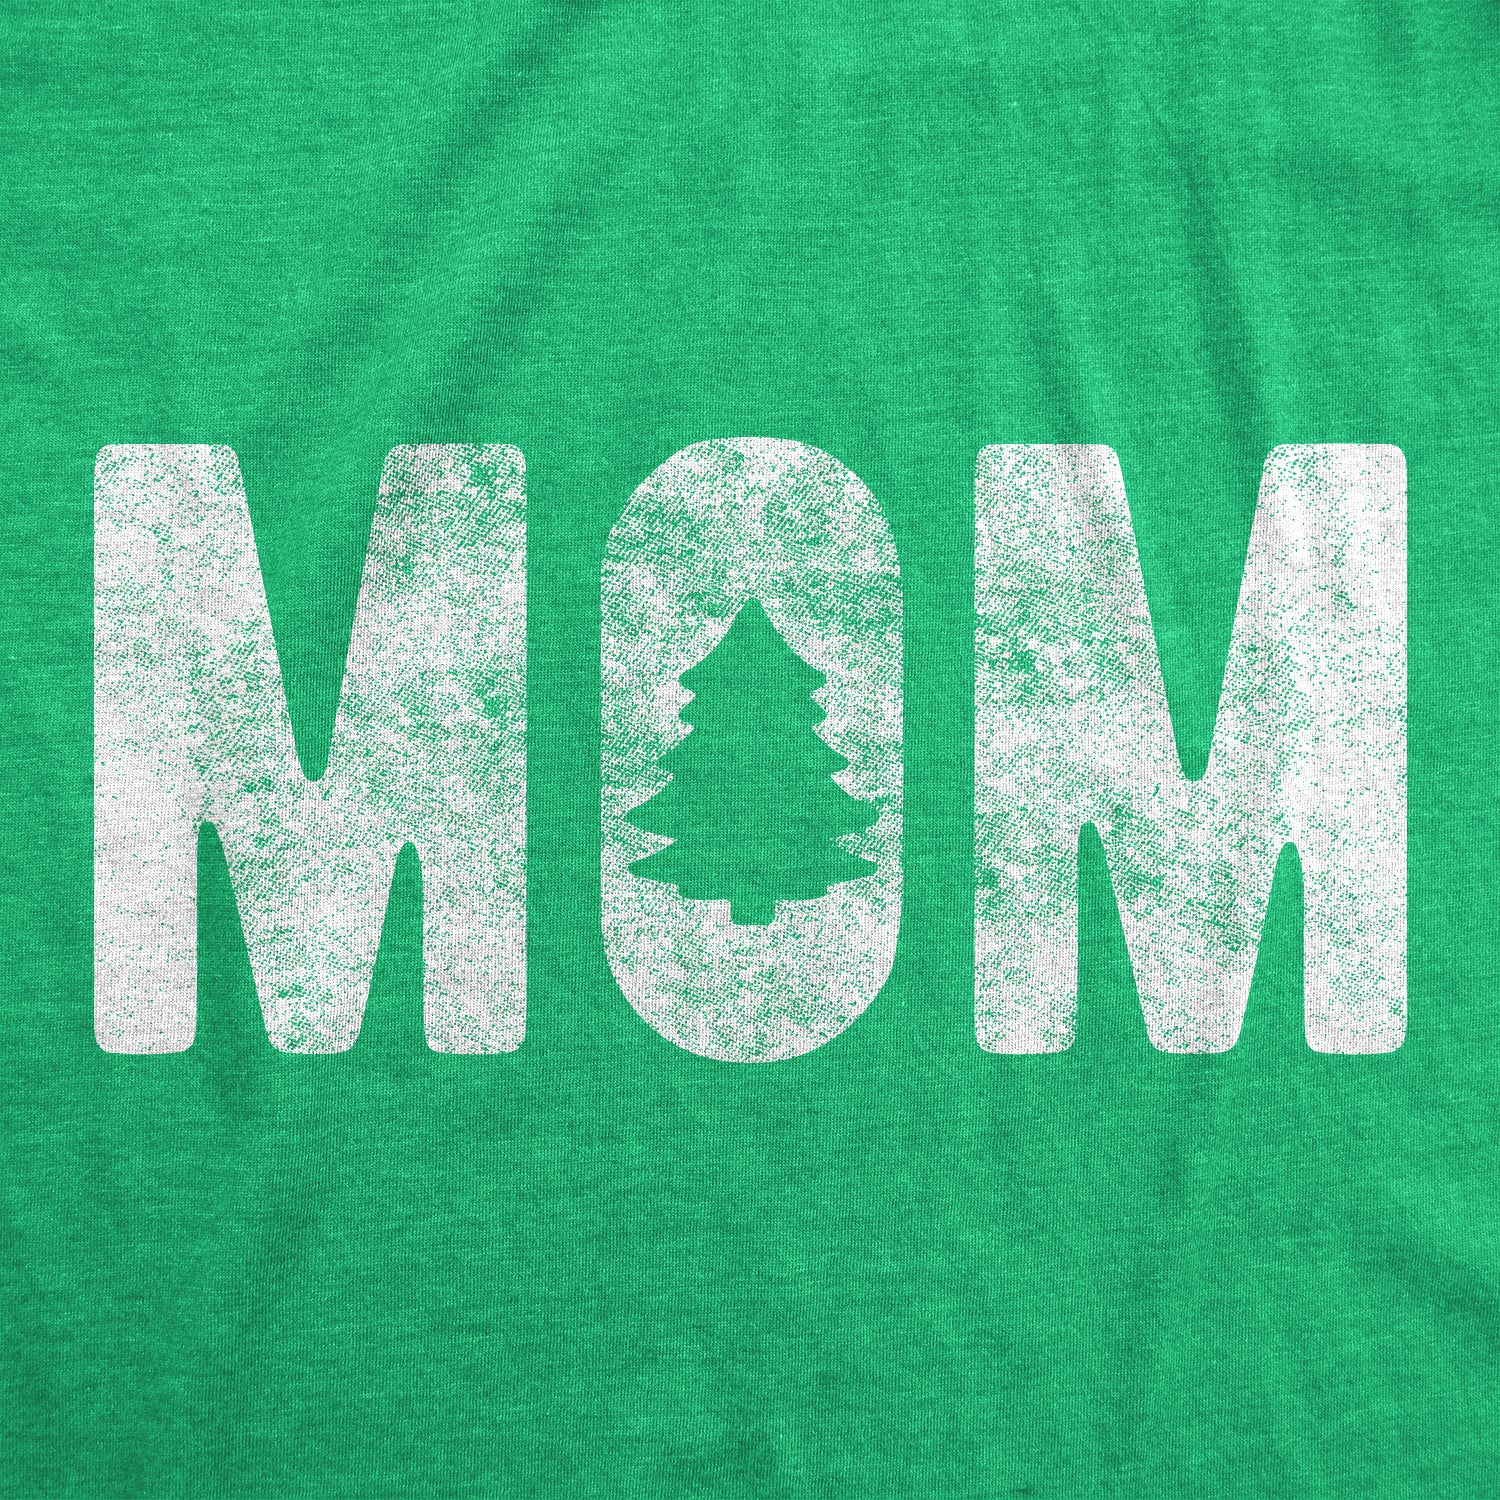 Funny Heather Green - Mom Mom Christmas Womens T Shirt Nerdy Christmas Tee